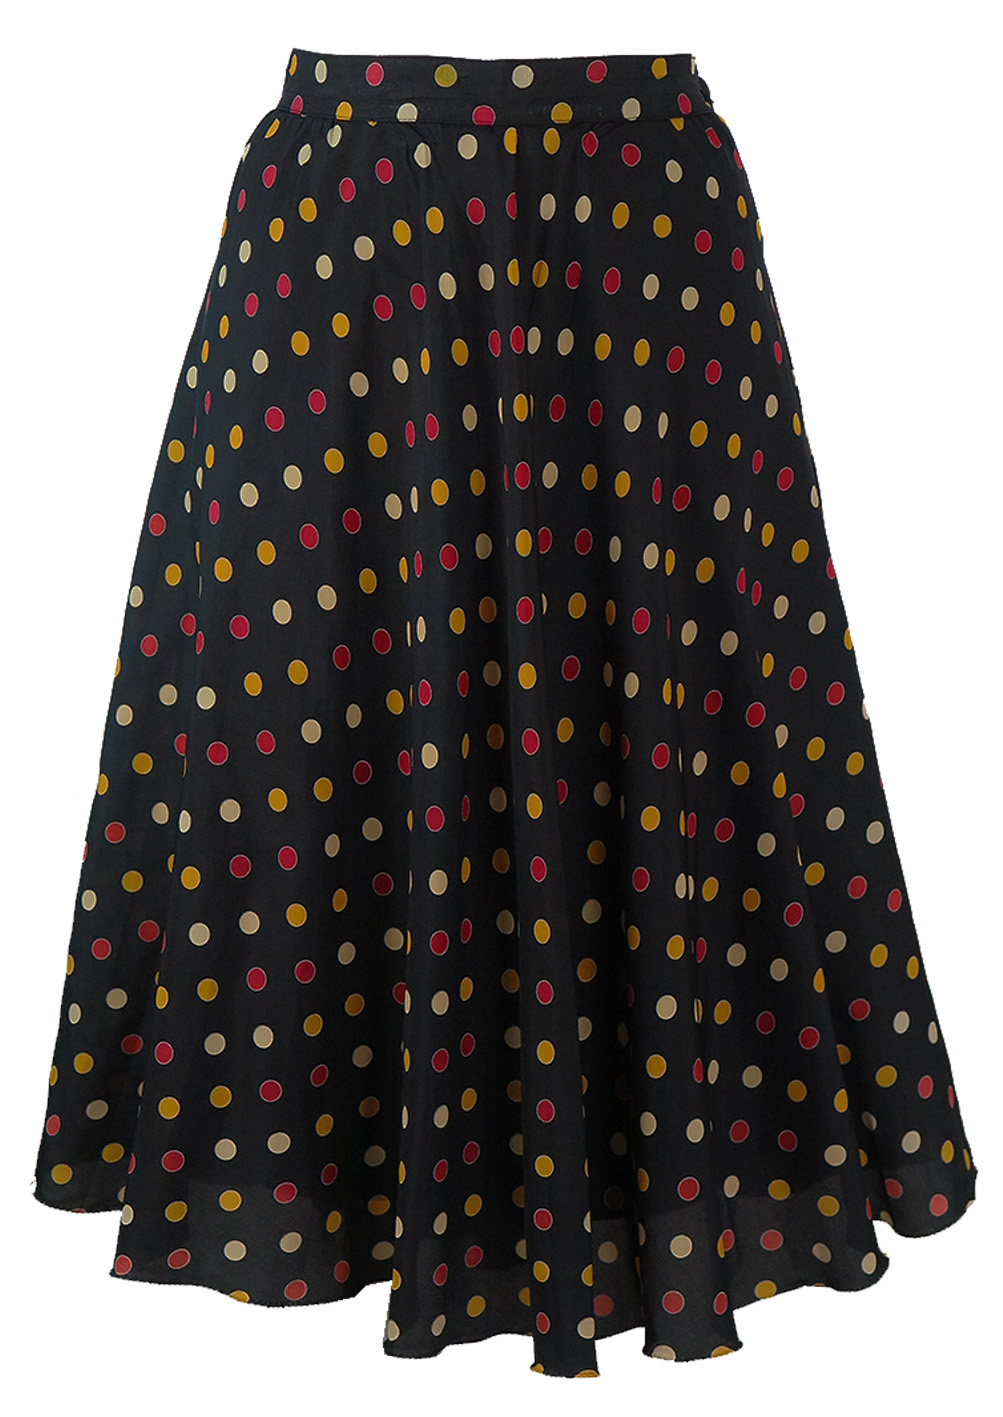 Black Midi Length Flared Skirt with Polka Dot Pattern - S/M | Reign Vintage